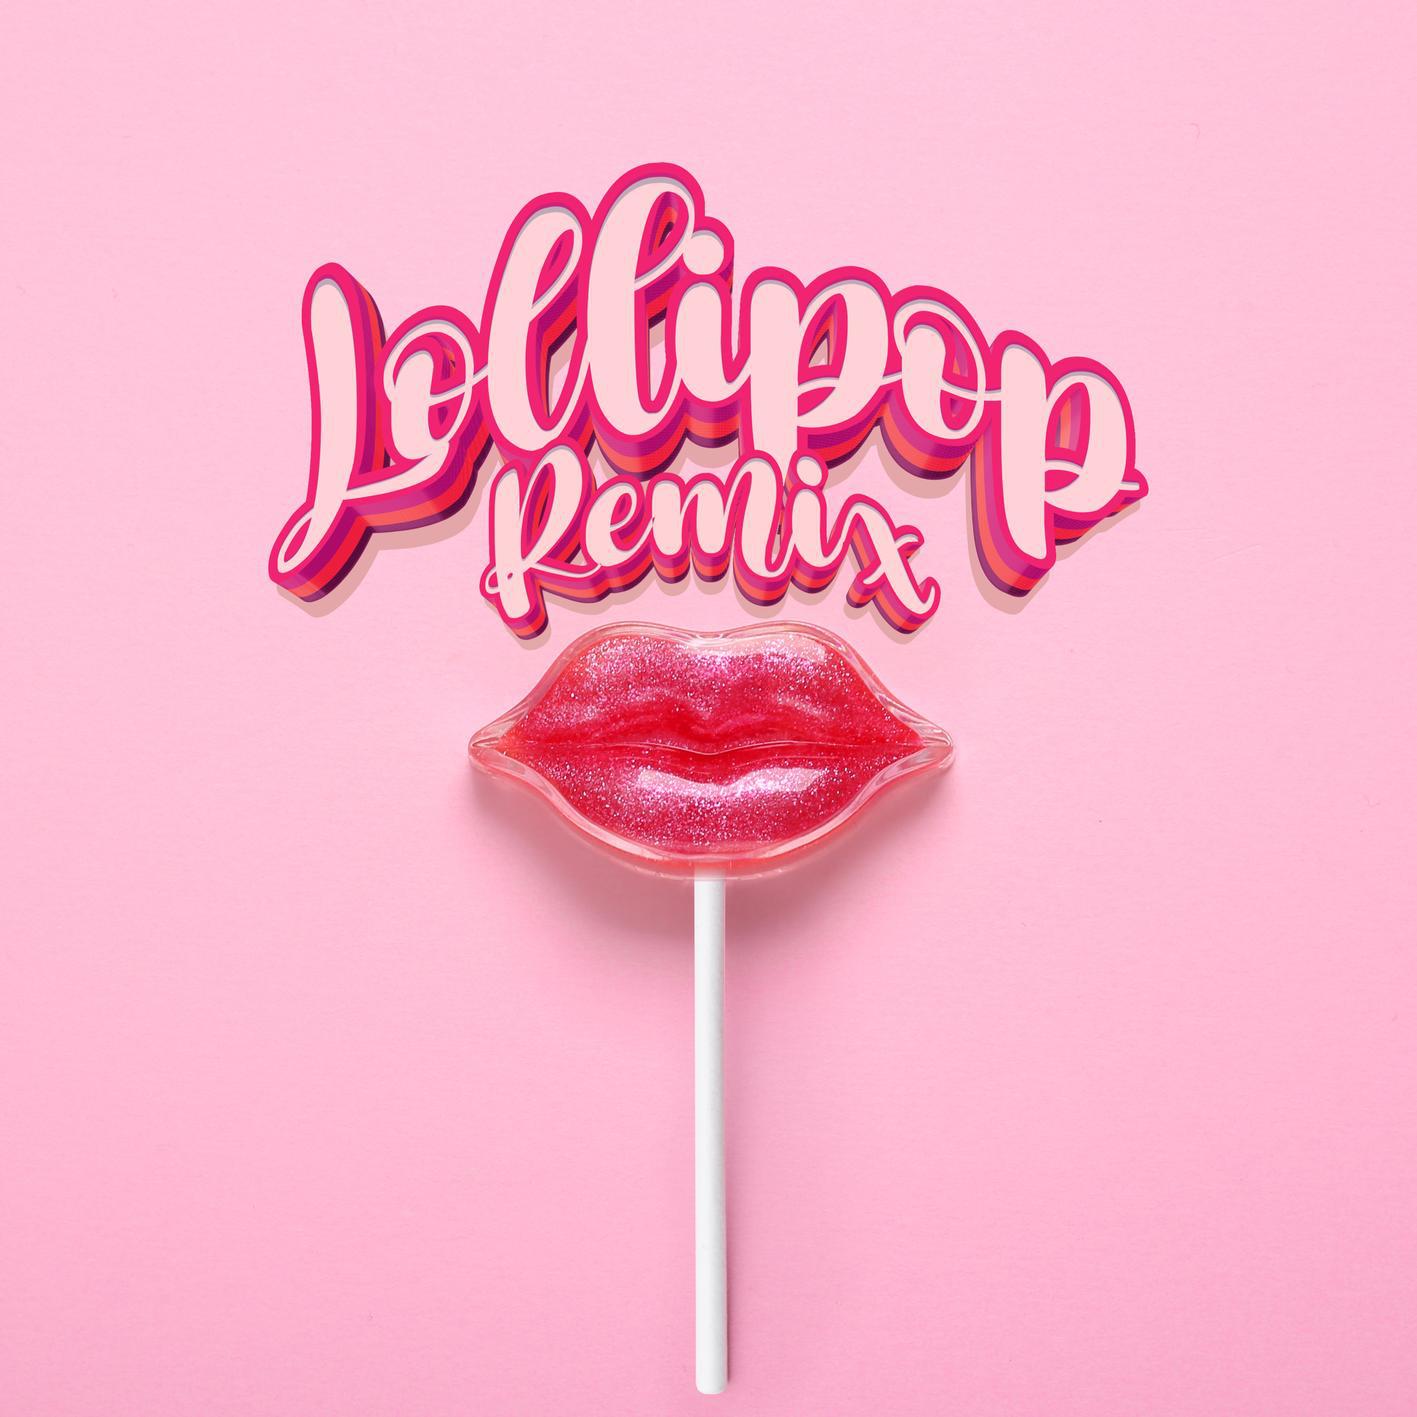 Darell - Lollipop (Remix)